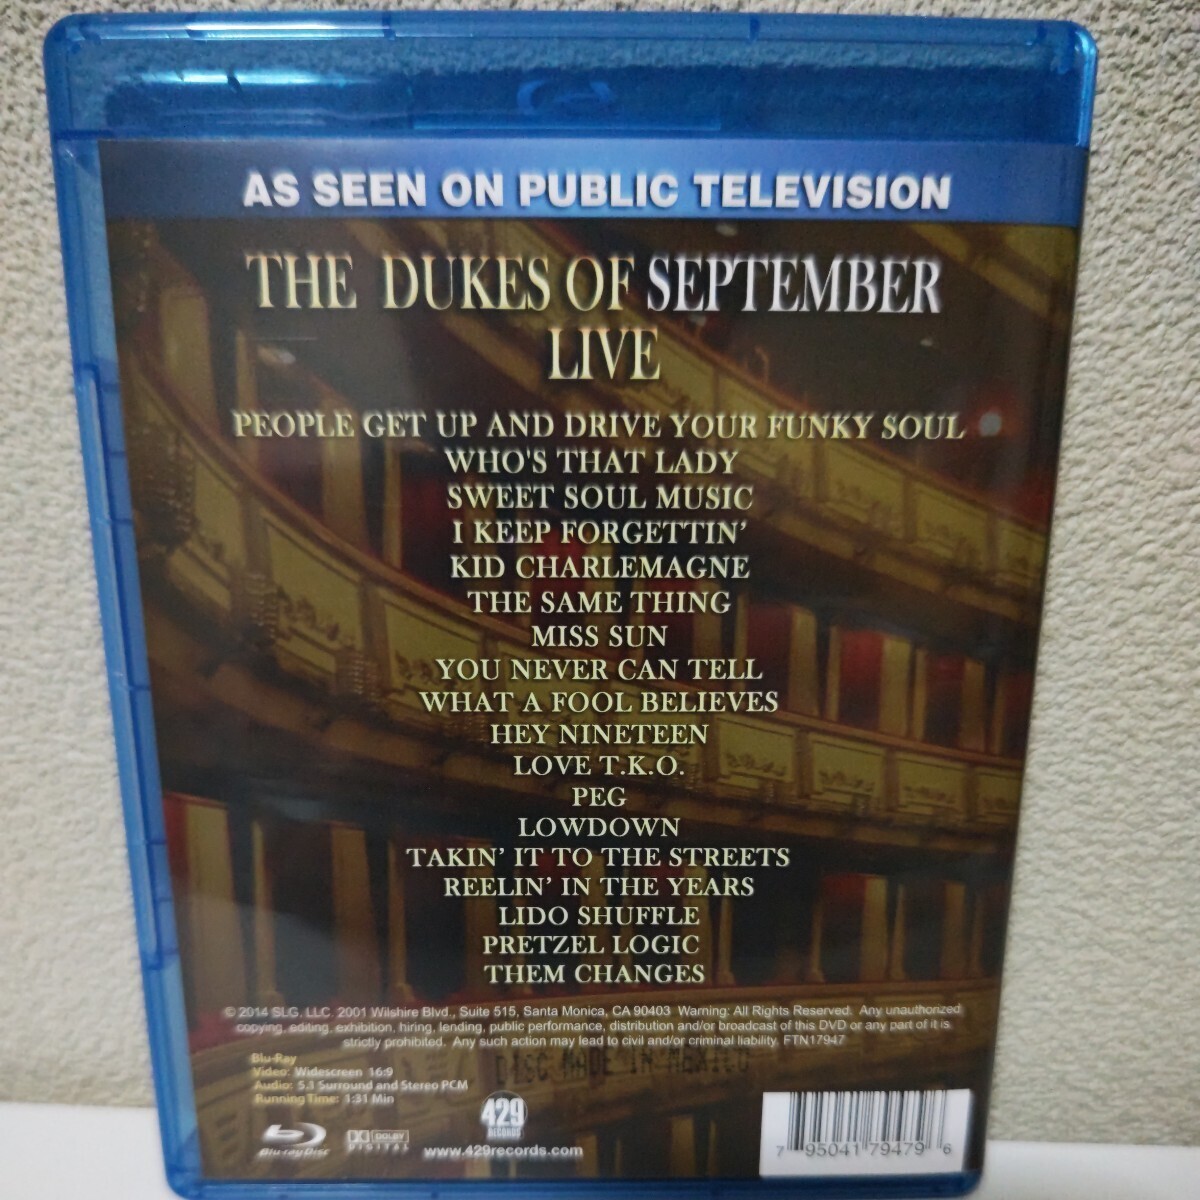 DONALD FAGEN, MICHAEL McDONALD, BOZ SCAGGS/The Dukes of September Live foreign record Blu-rayboz*s Cat's gs Donald *feigenetc